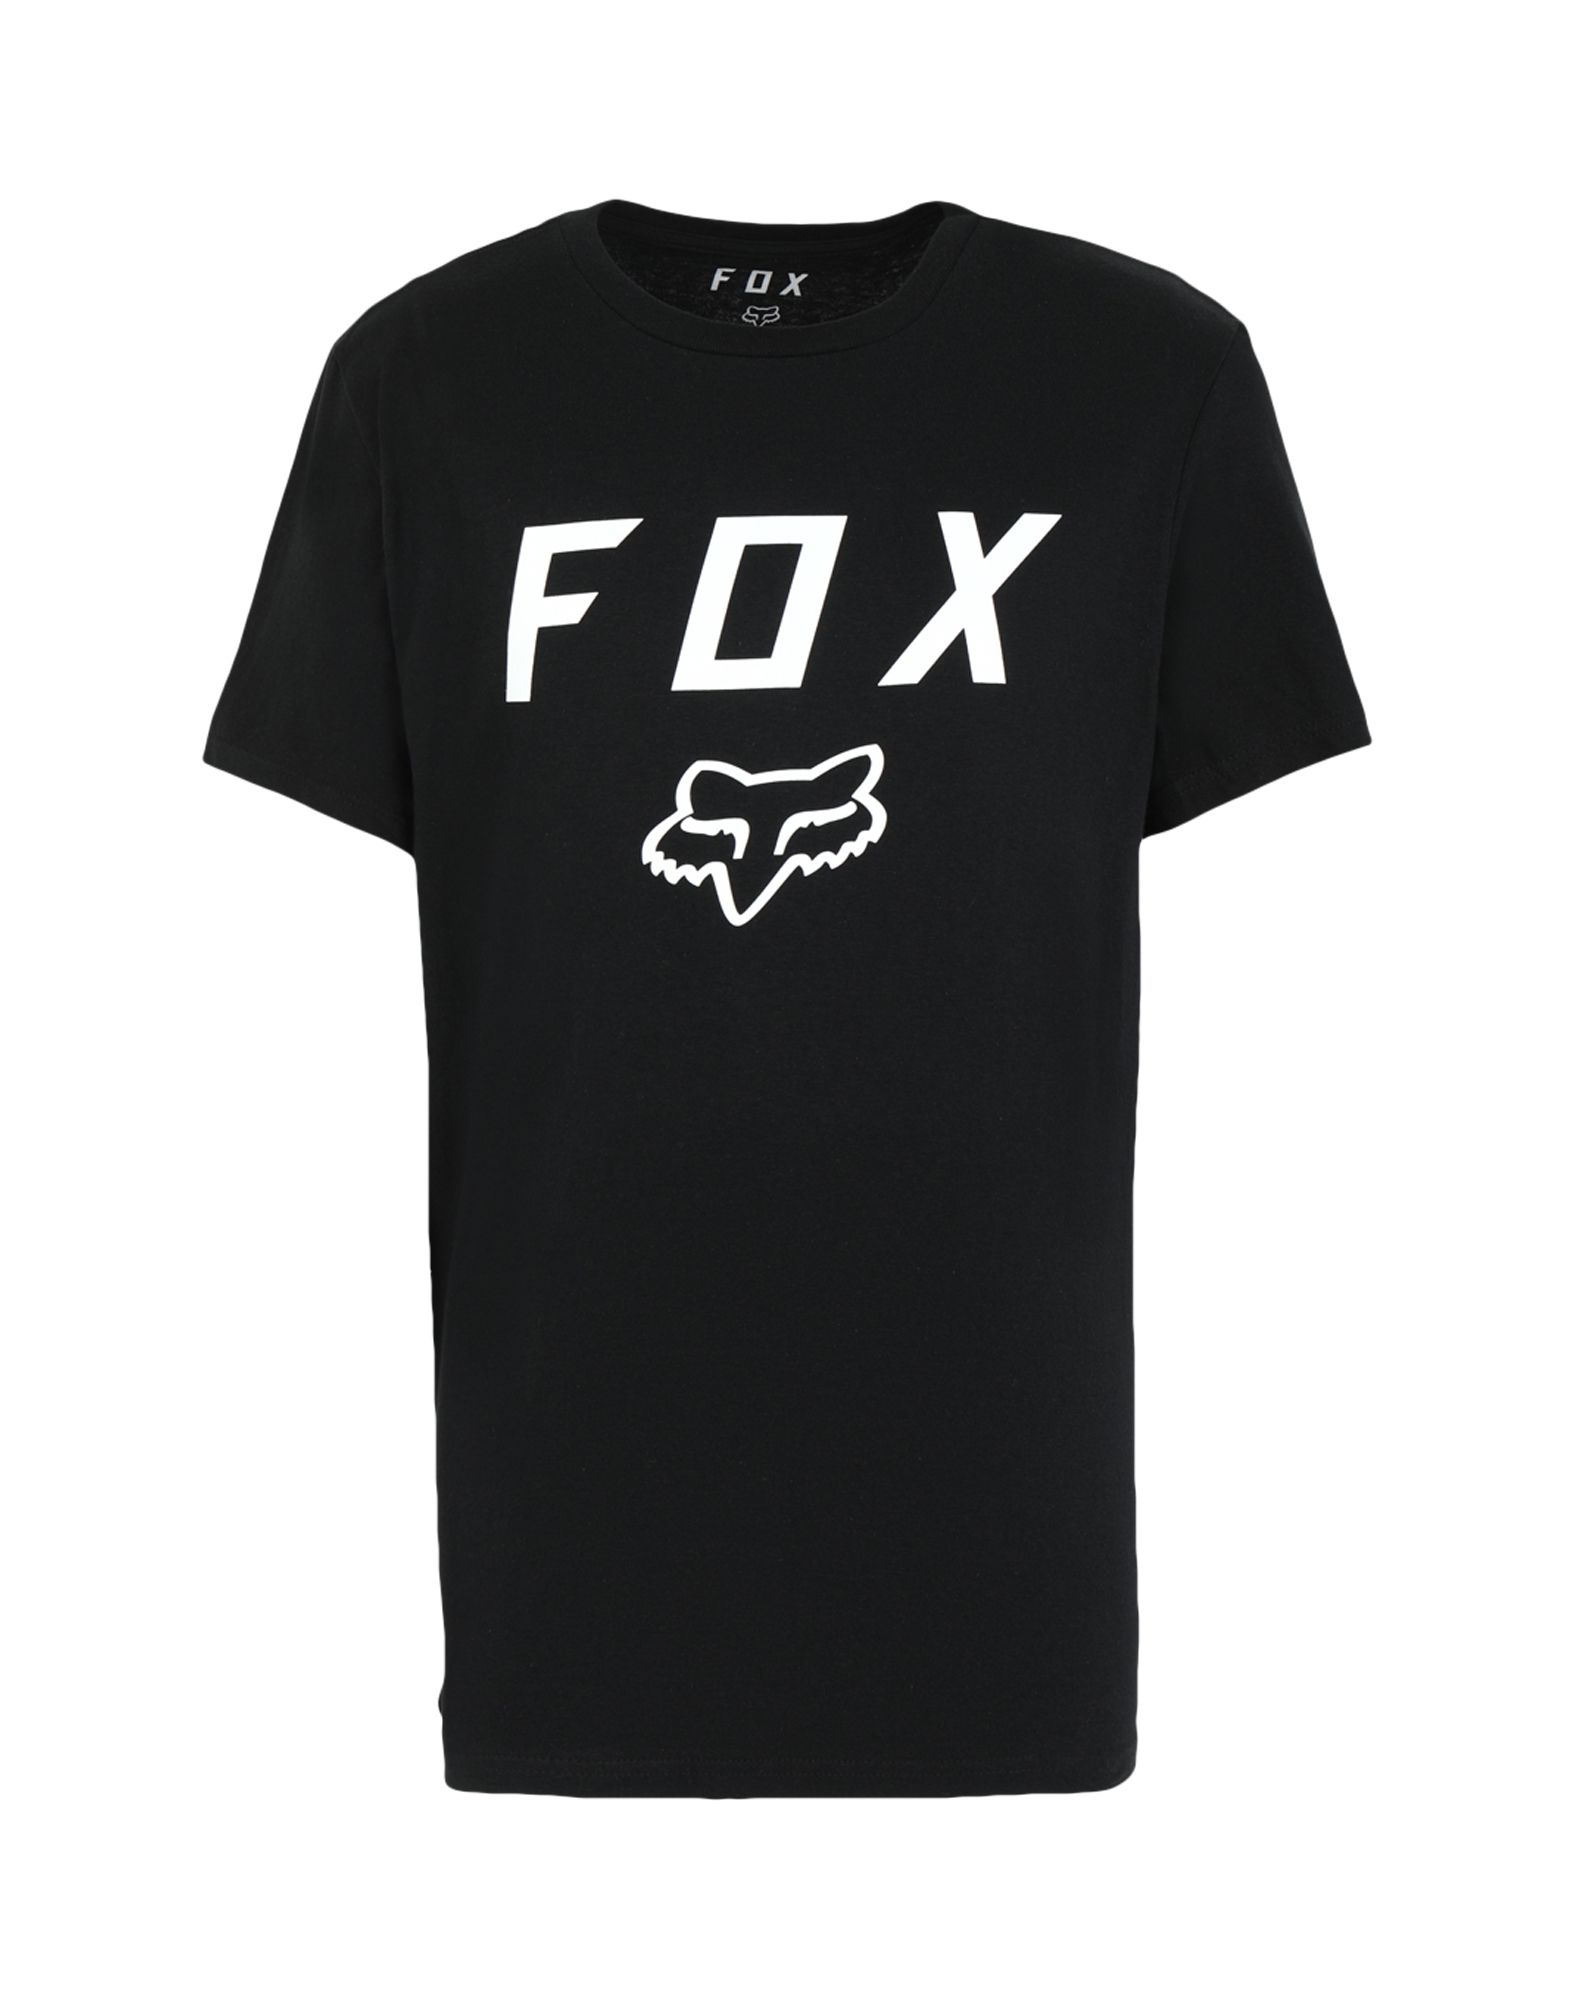 Бренд fox. Майка Fox Racing. Футболка Fox. Детские футболки Fox Racing. Футболка мужская с брендом лиса.